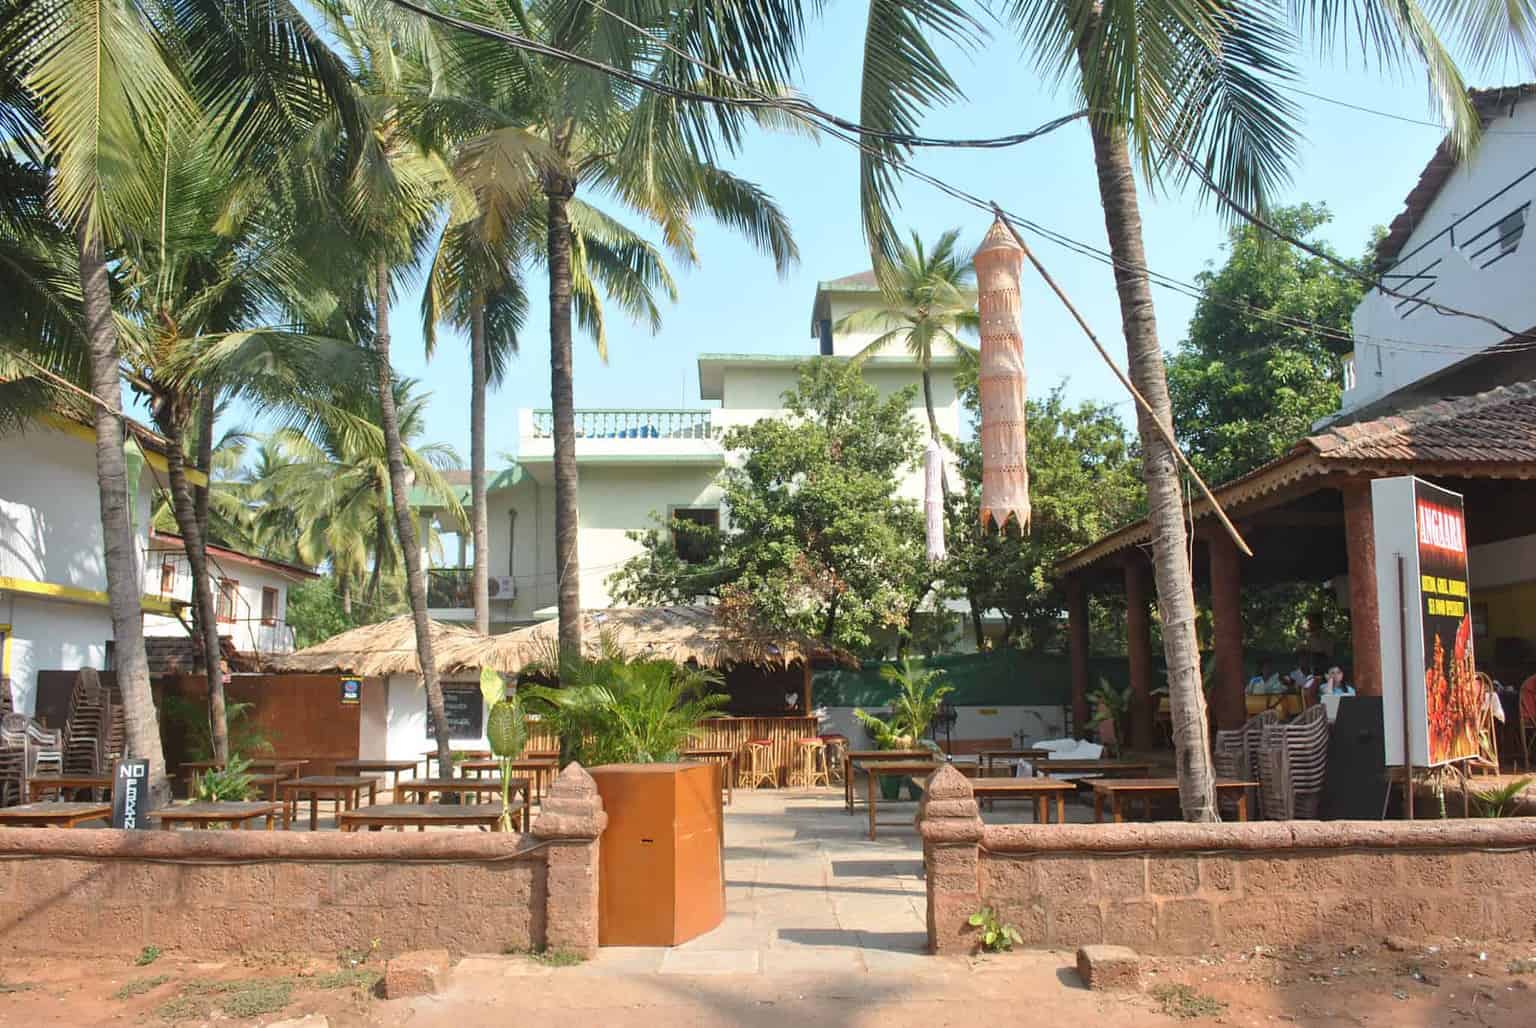 Ezue Bia Guest House, Candolim Beach, Goa | Hotel Review